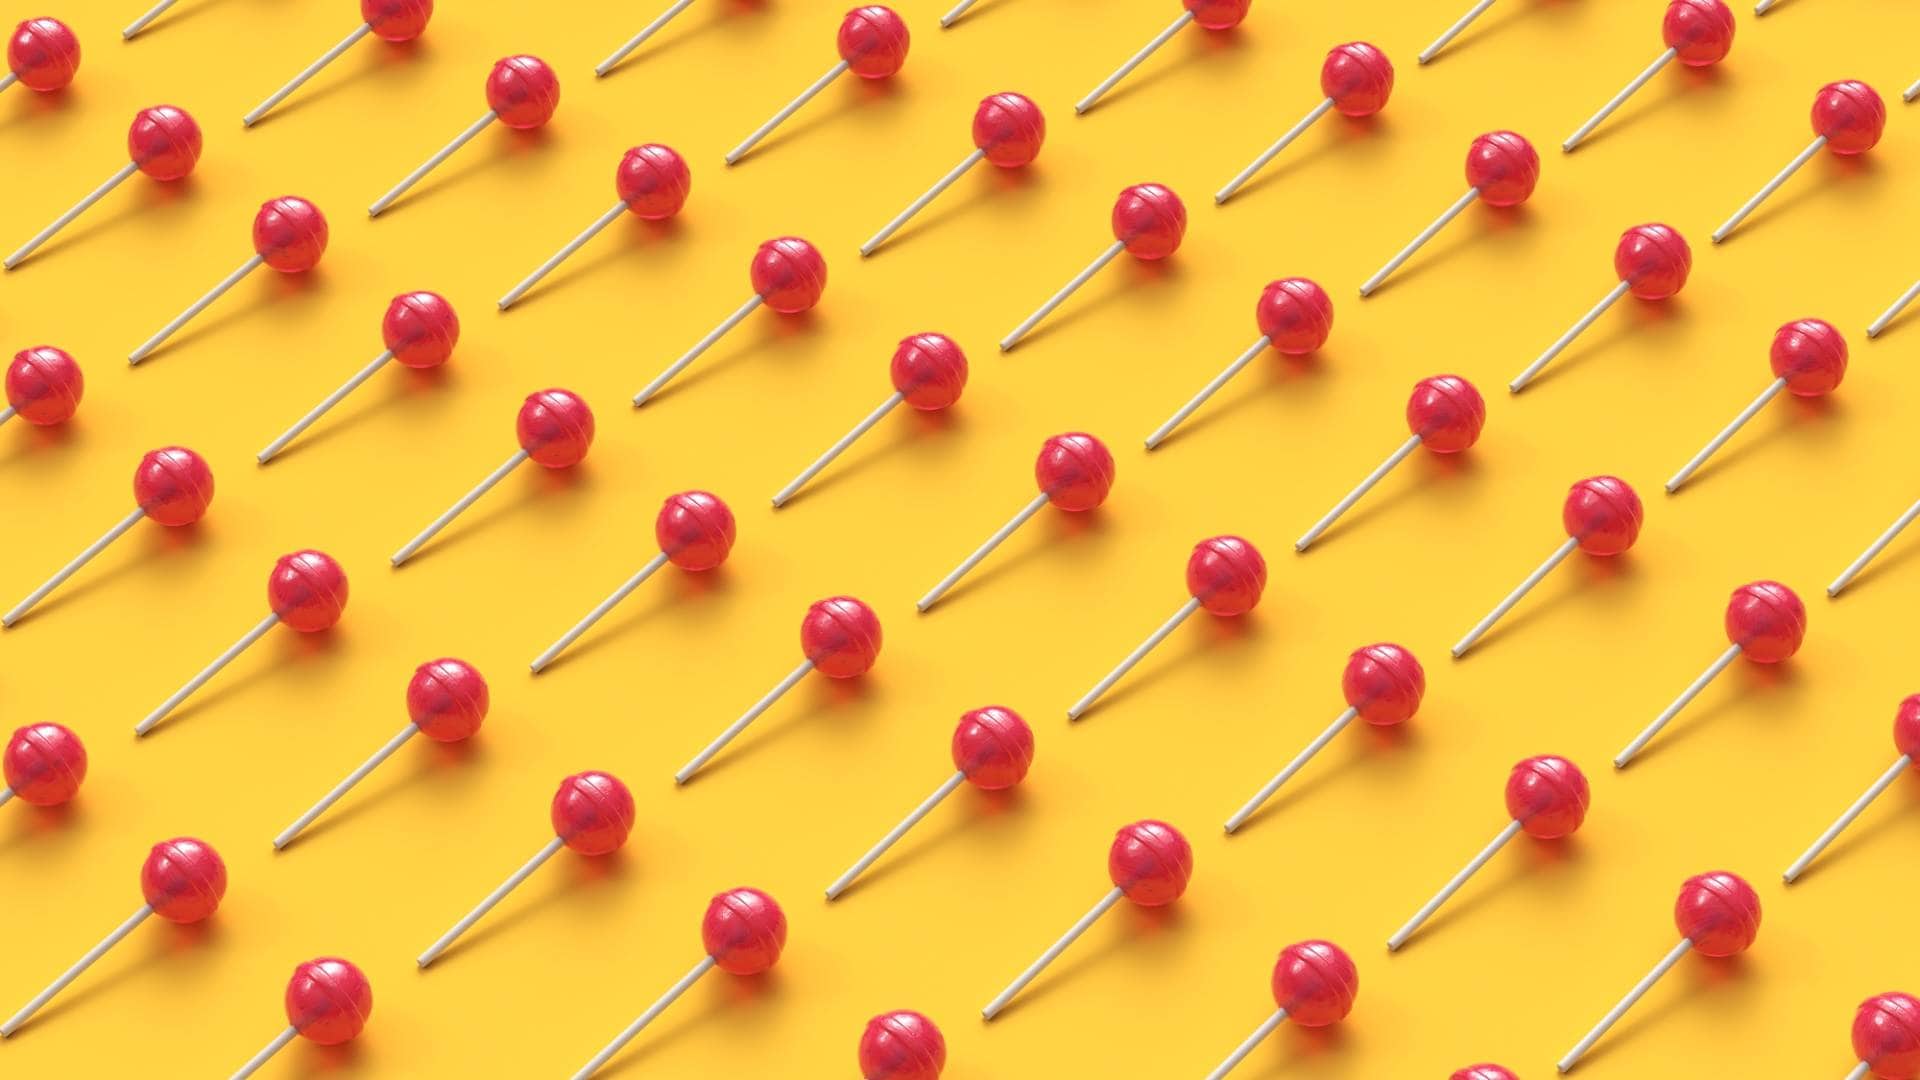 Sweet lollipops arranged in rows on yellow background.